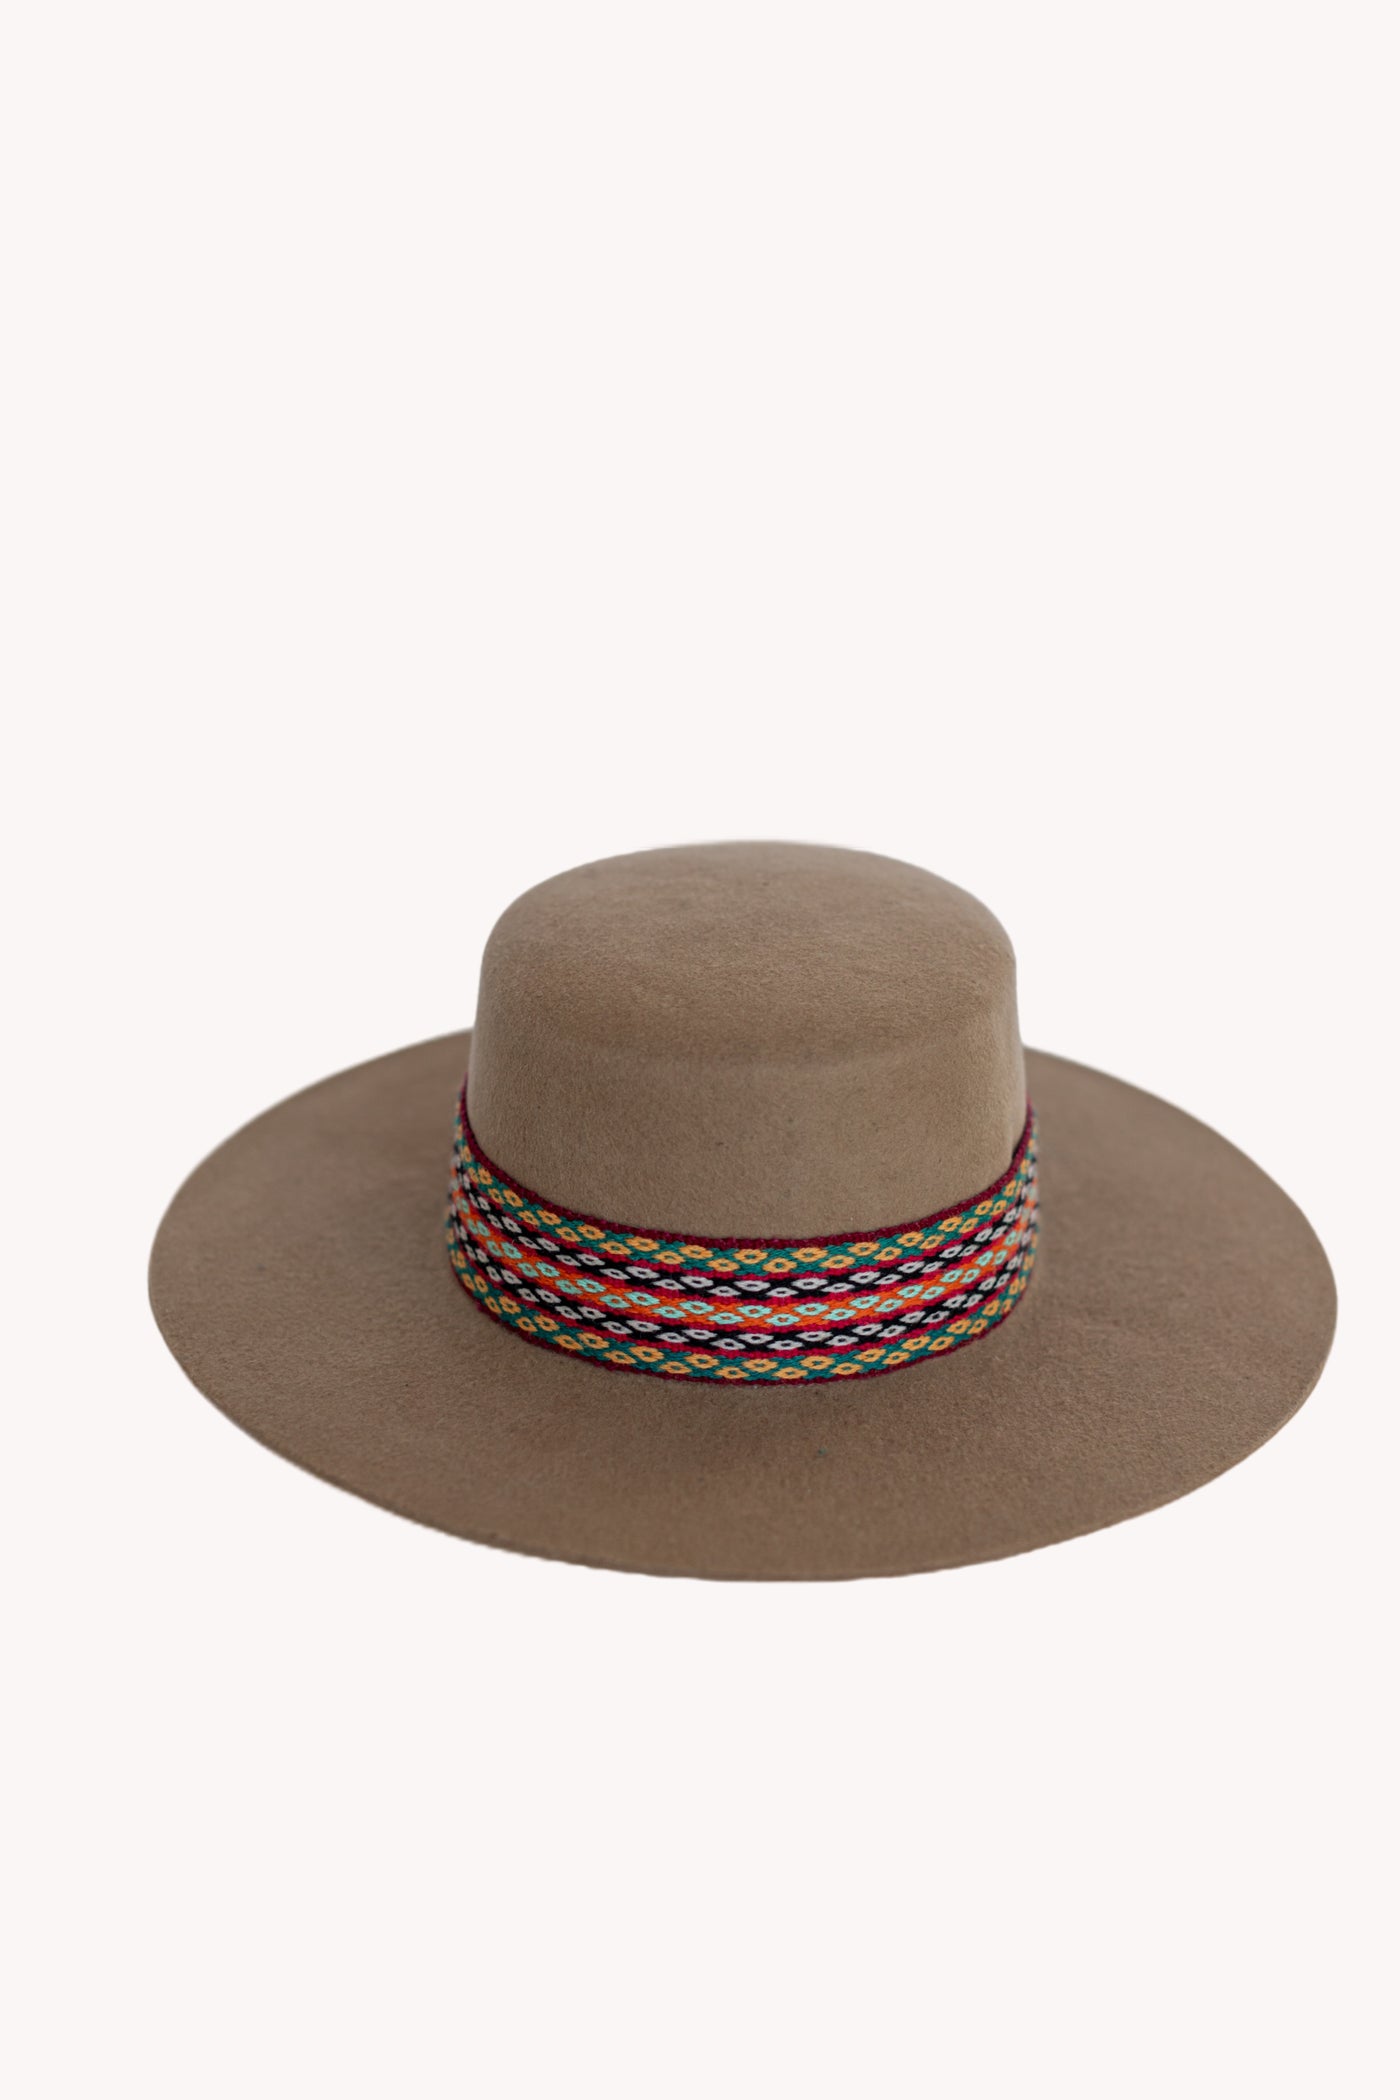 Beige Spanish style alpaca wool hat